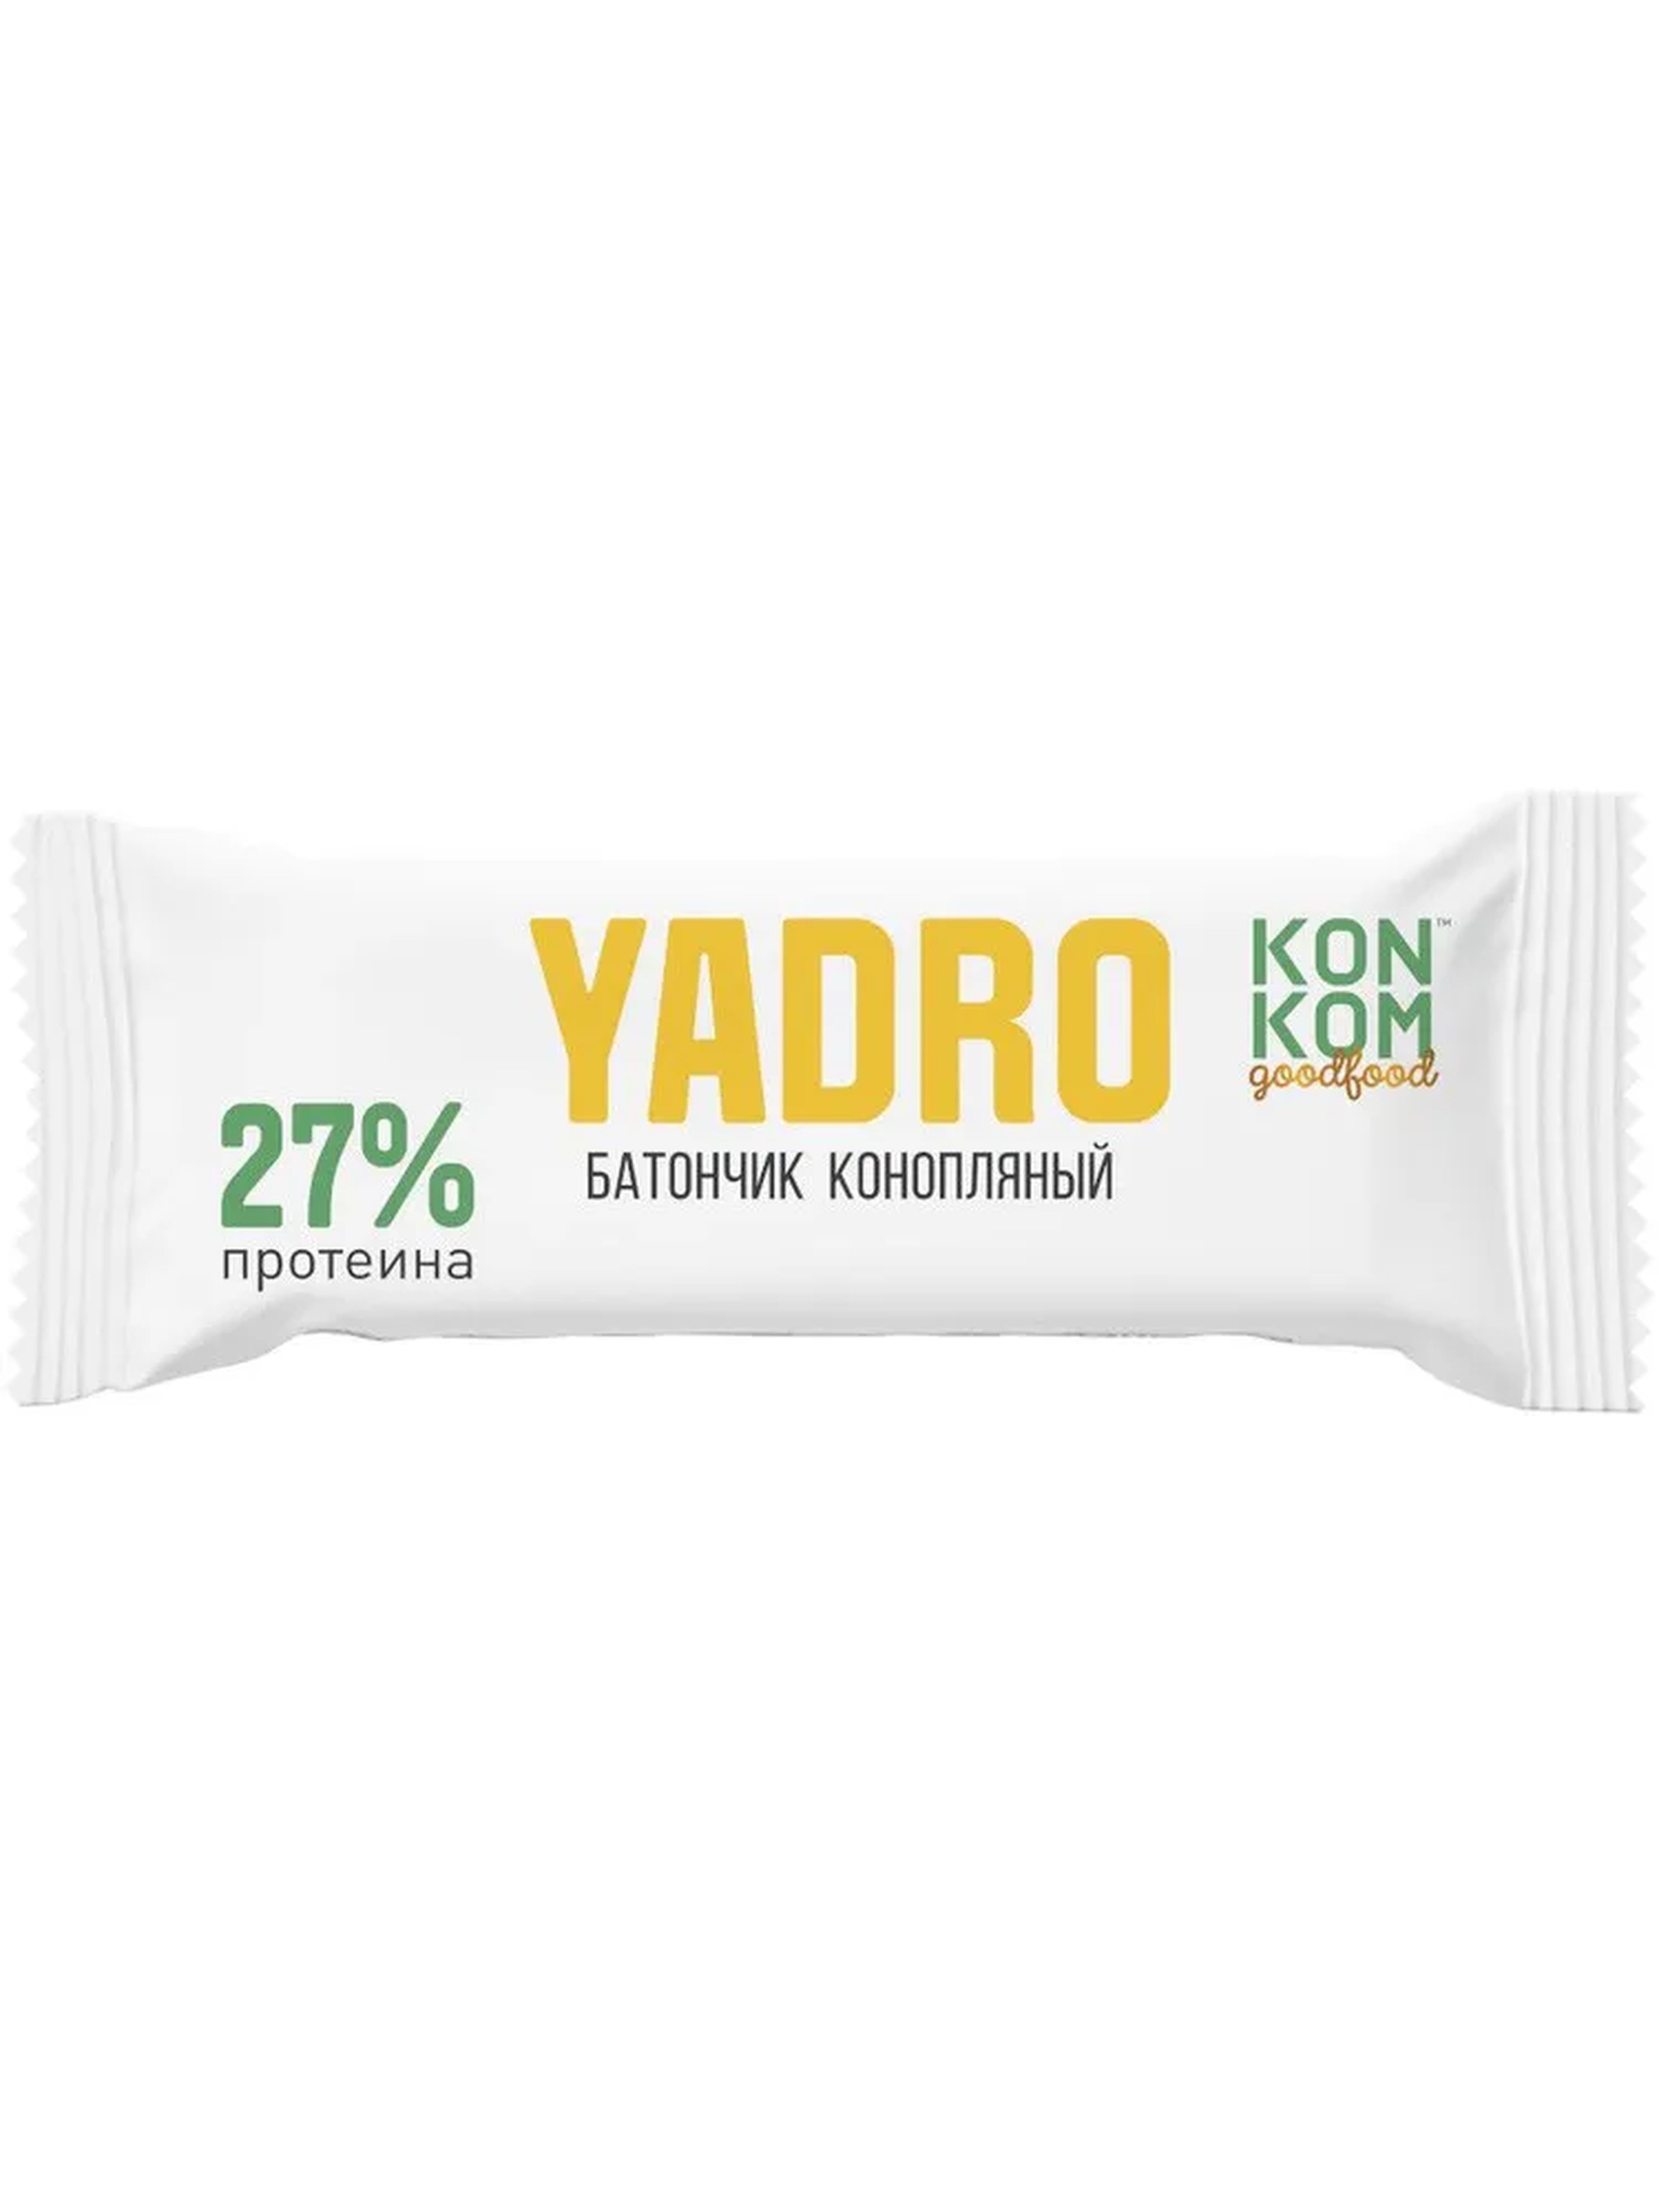 Батончик из ядер семян конопли KONKOM Yadro Energy классический 47 г